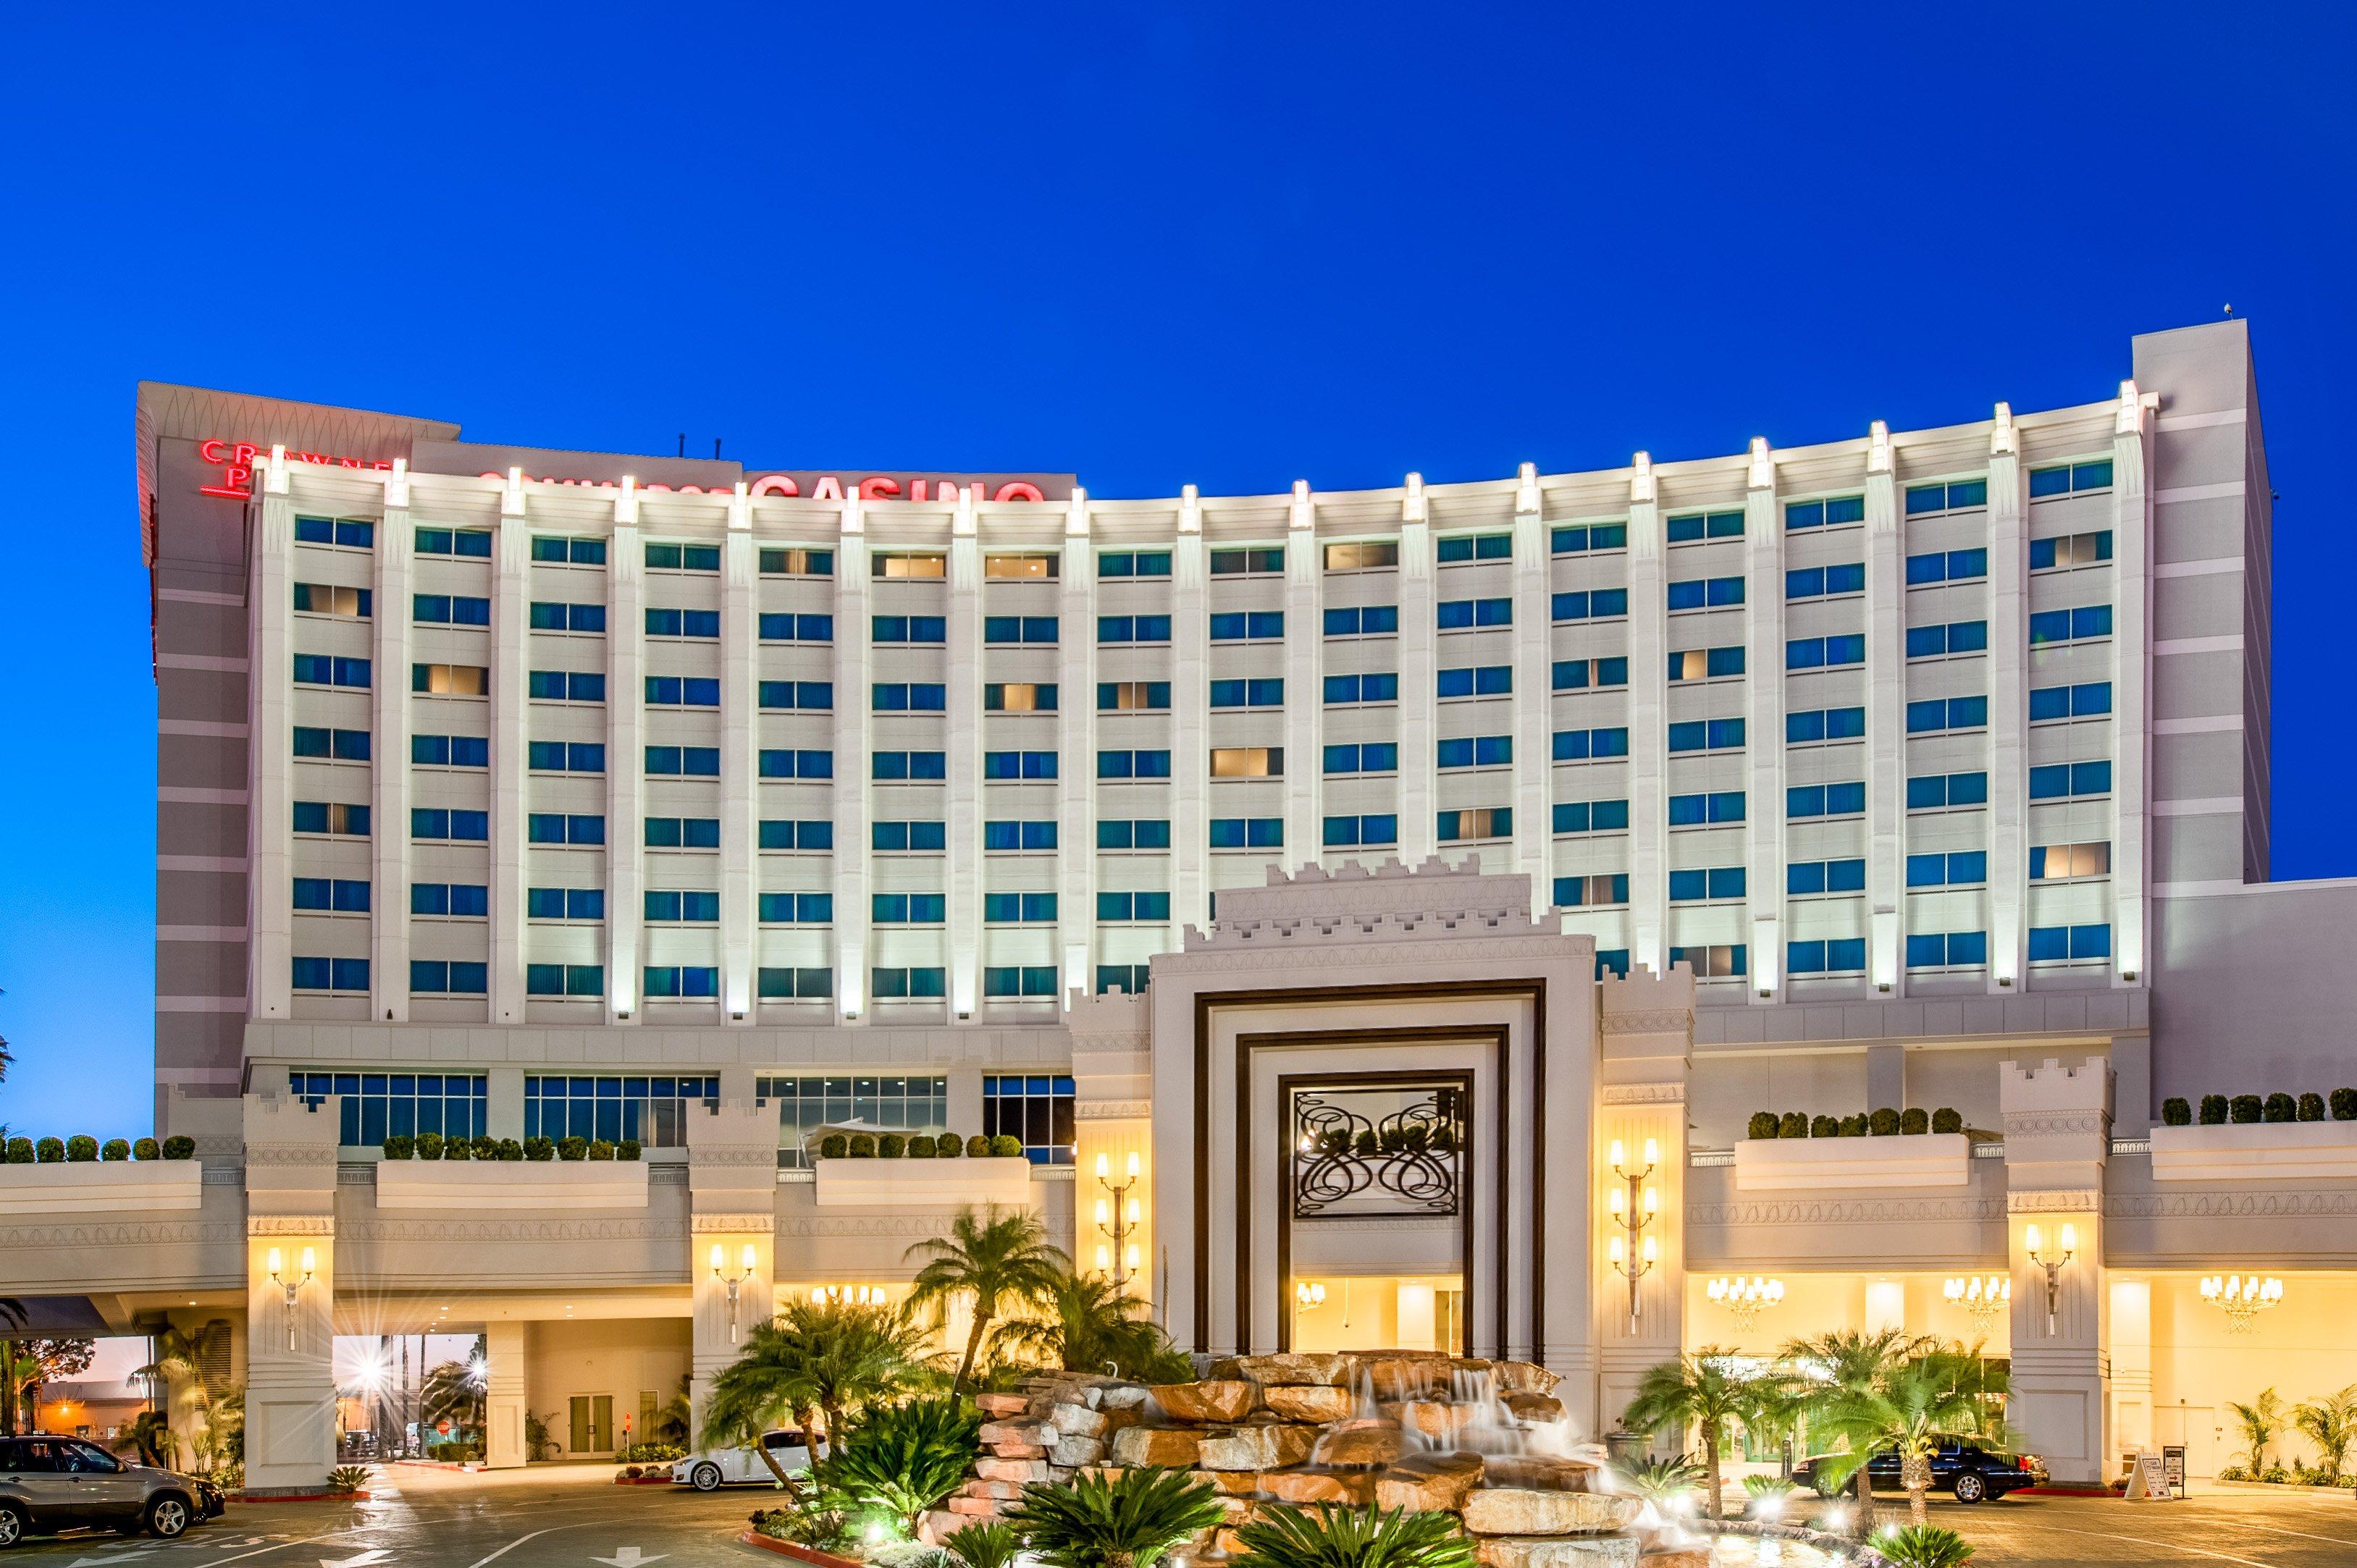 The Commerce Casino & Hotel image